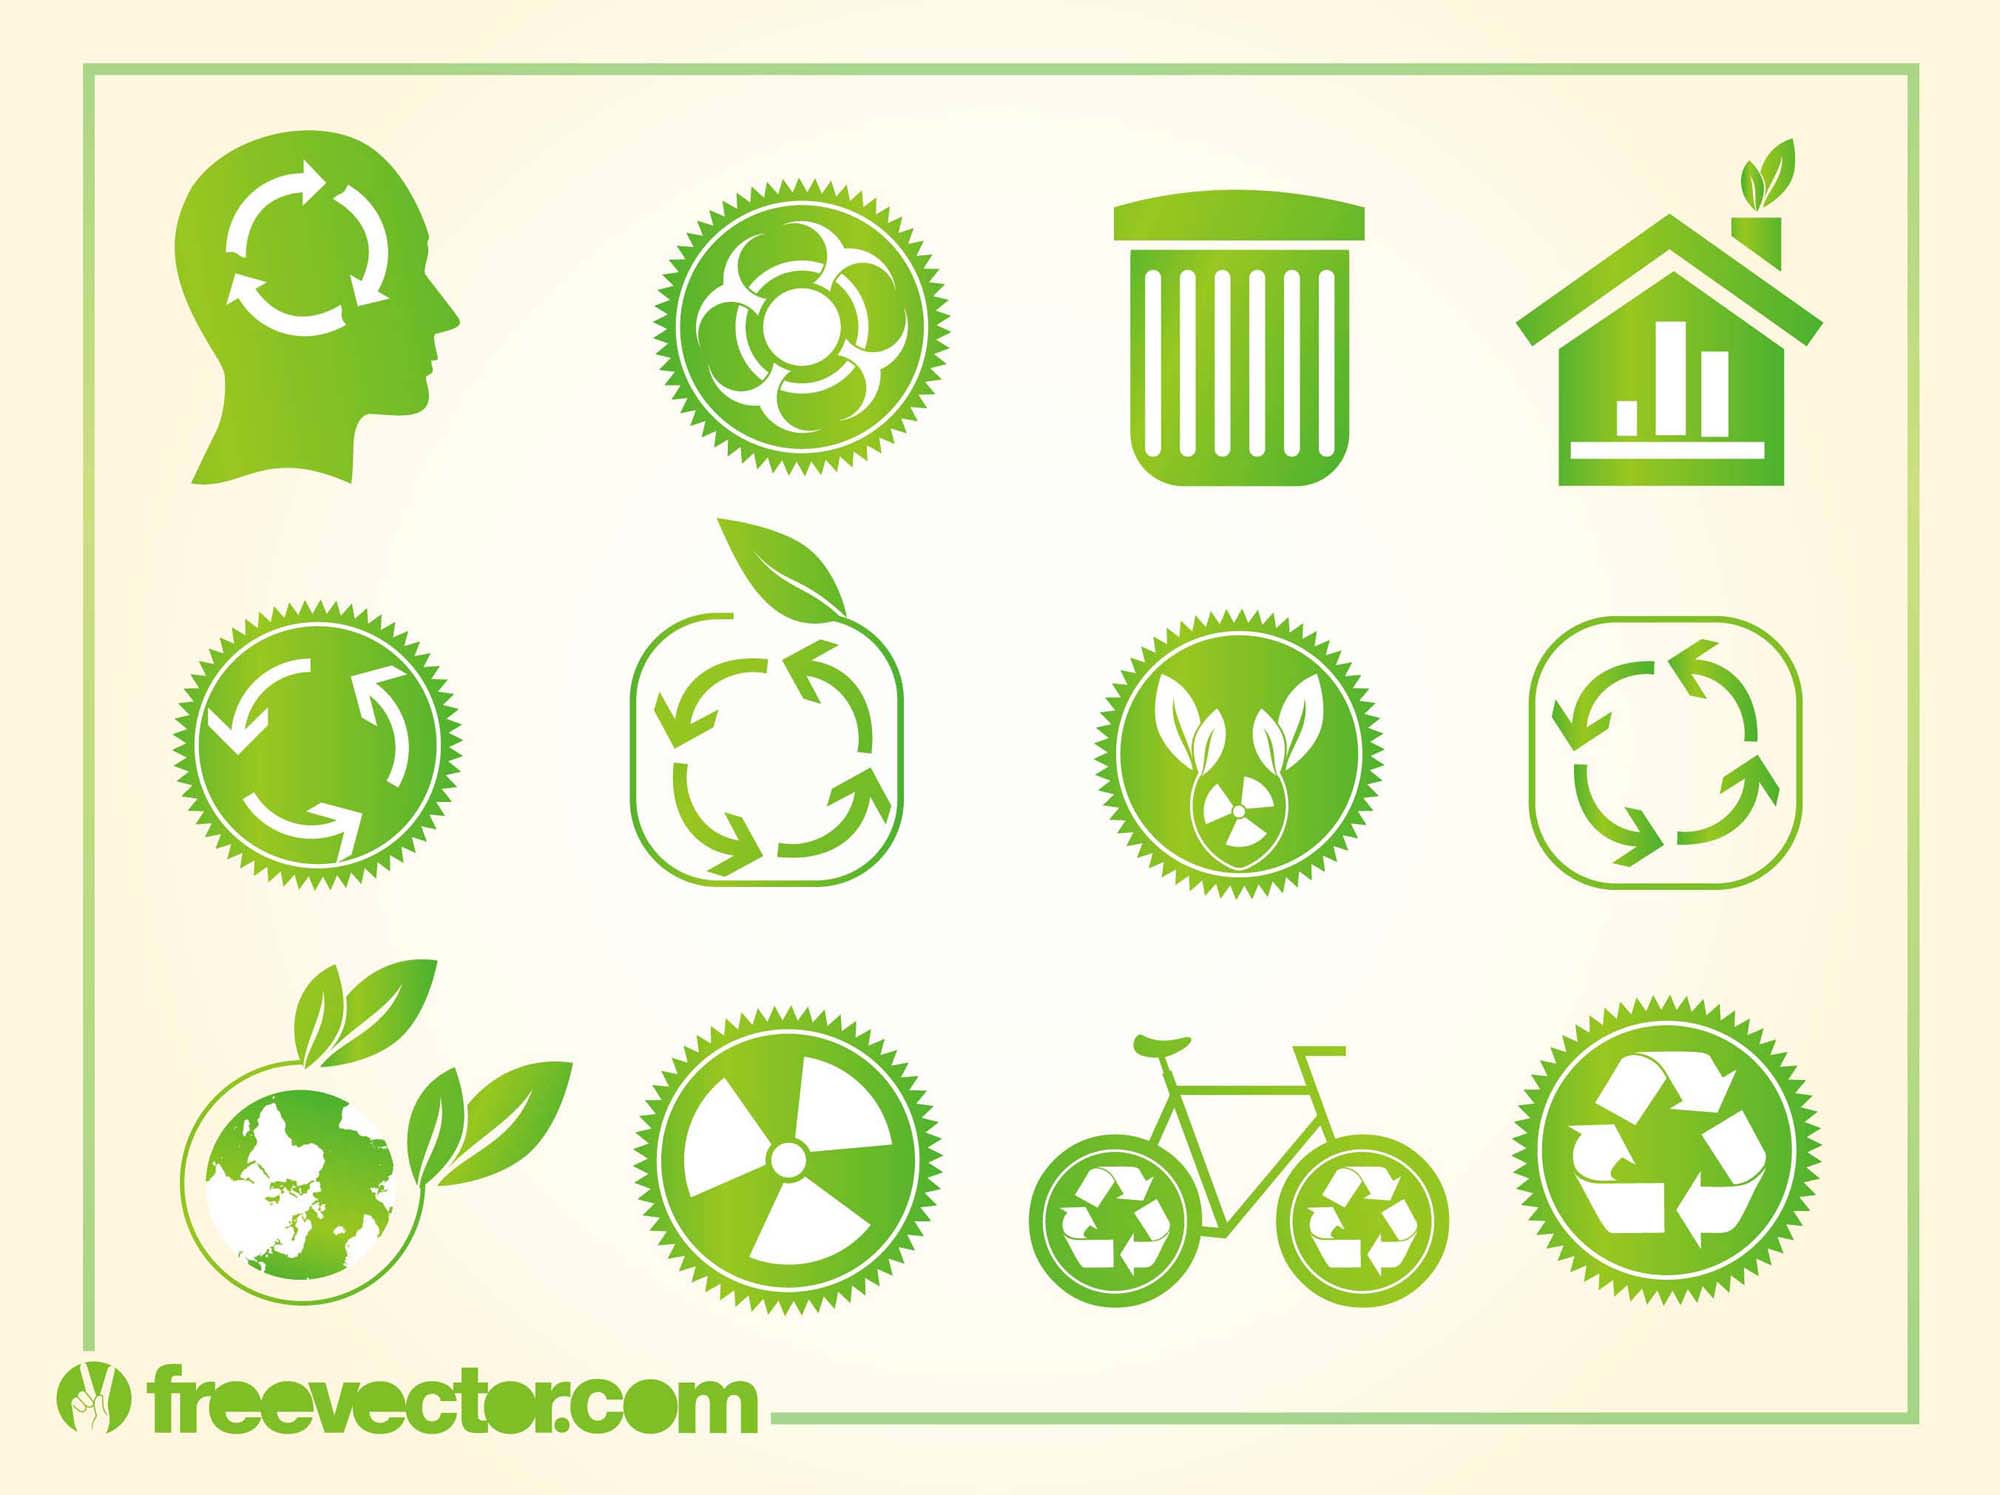 Recycling Logos Vector Art & Graphics | freevector.com